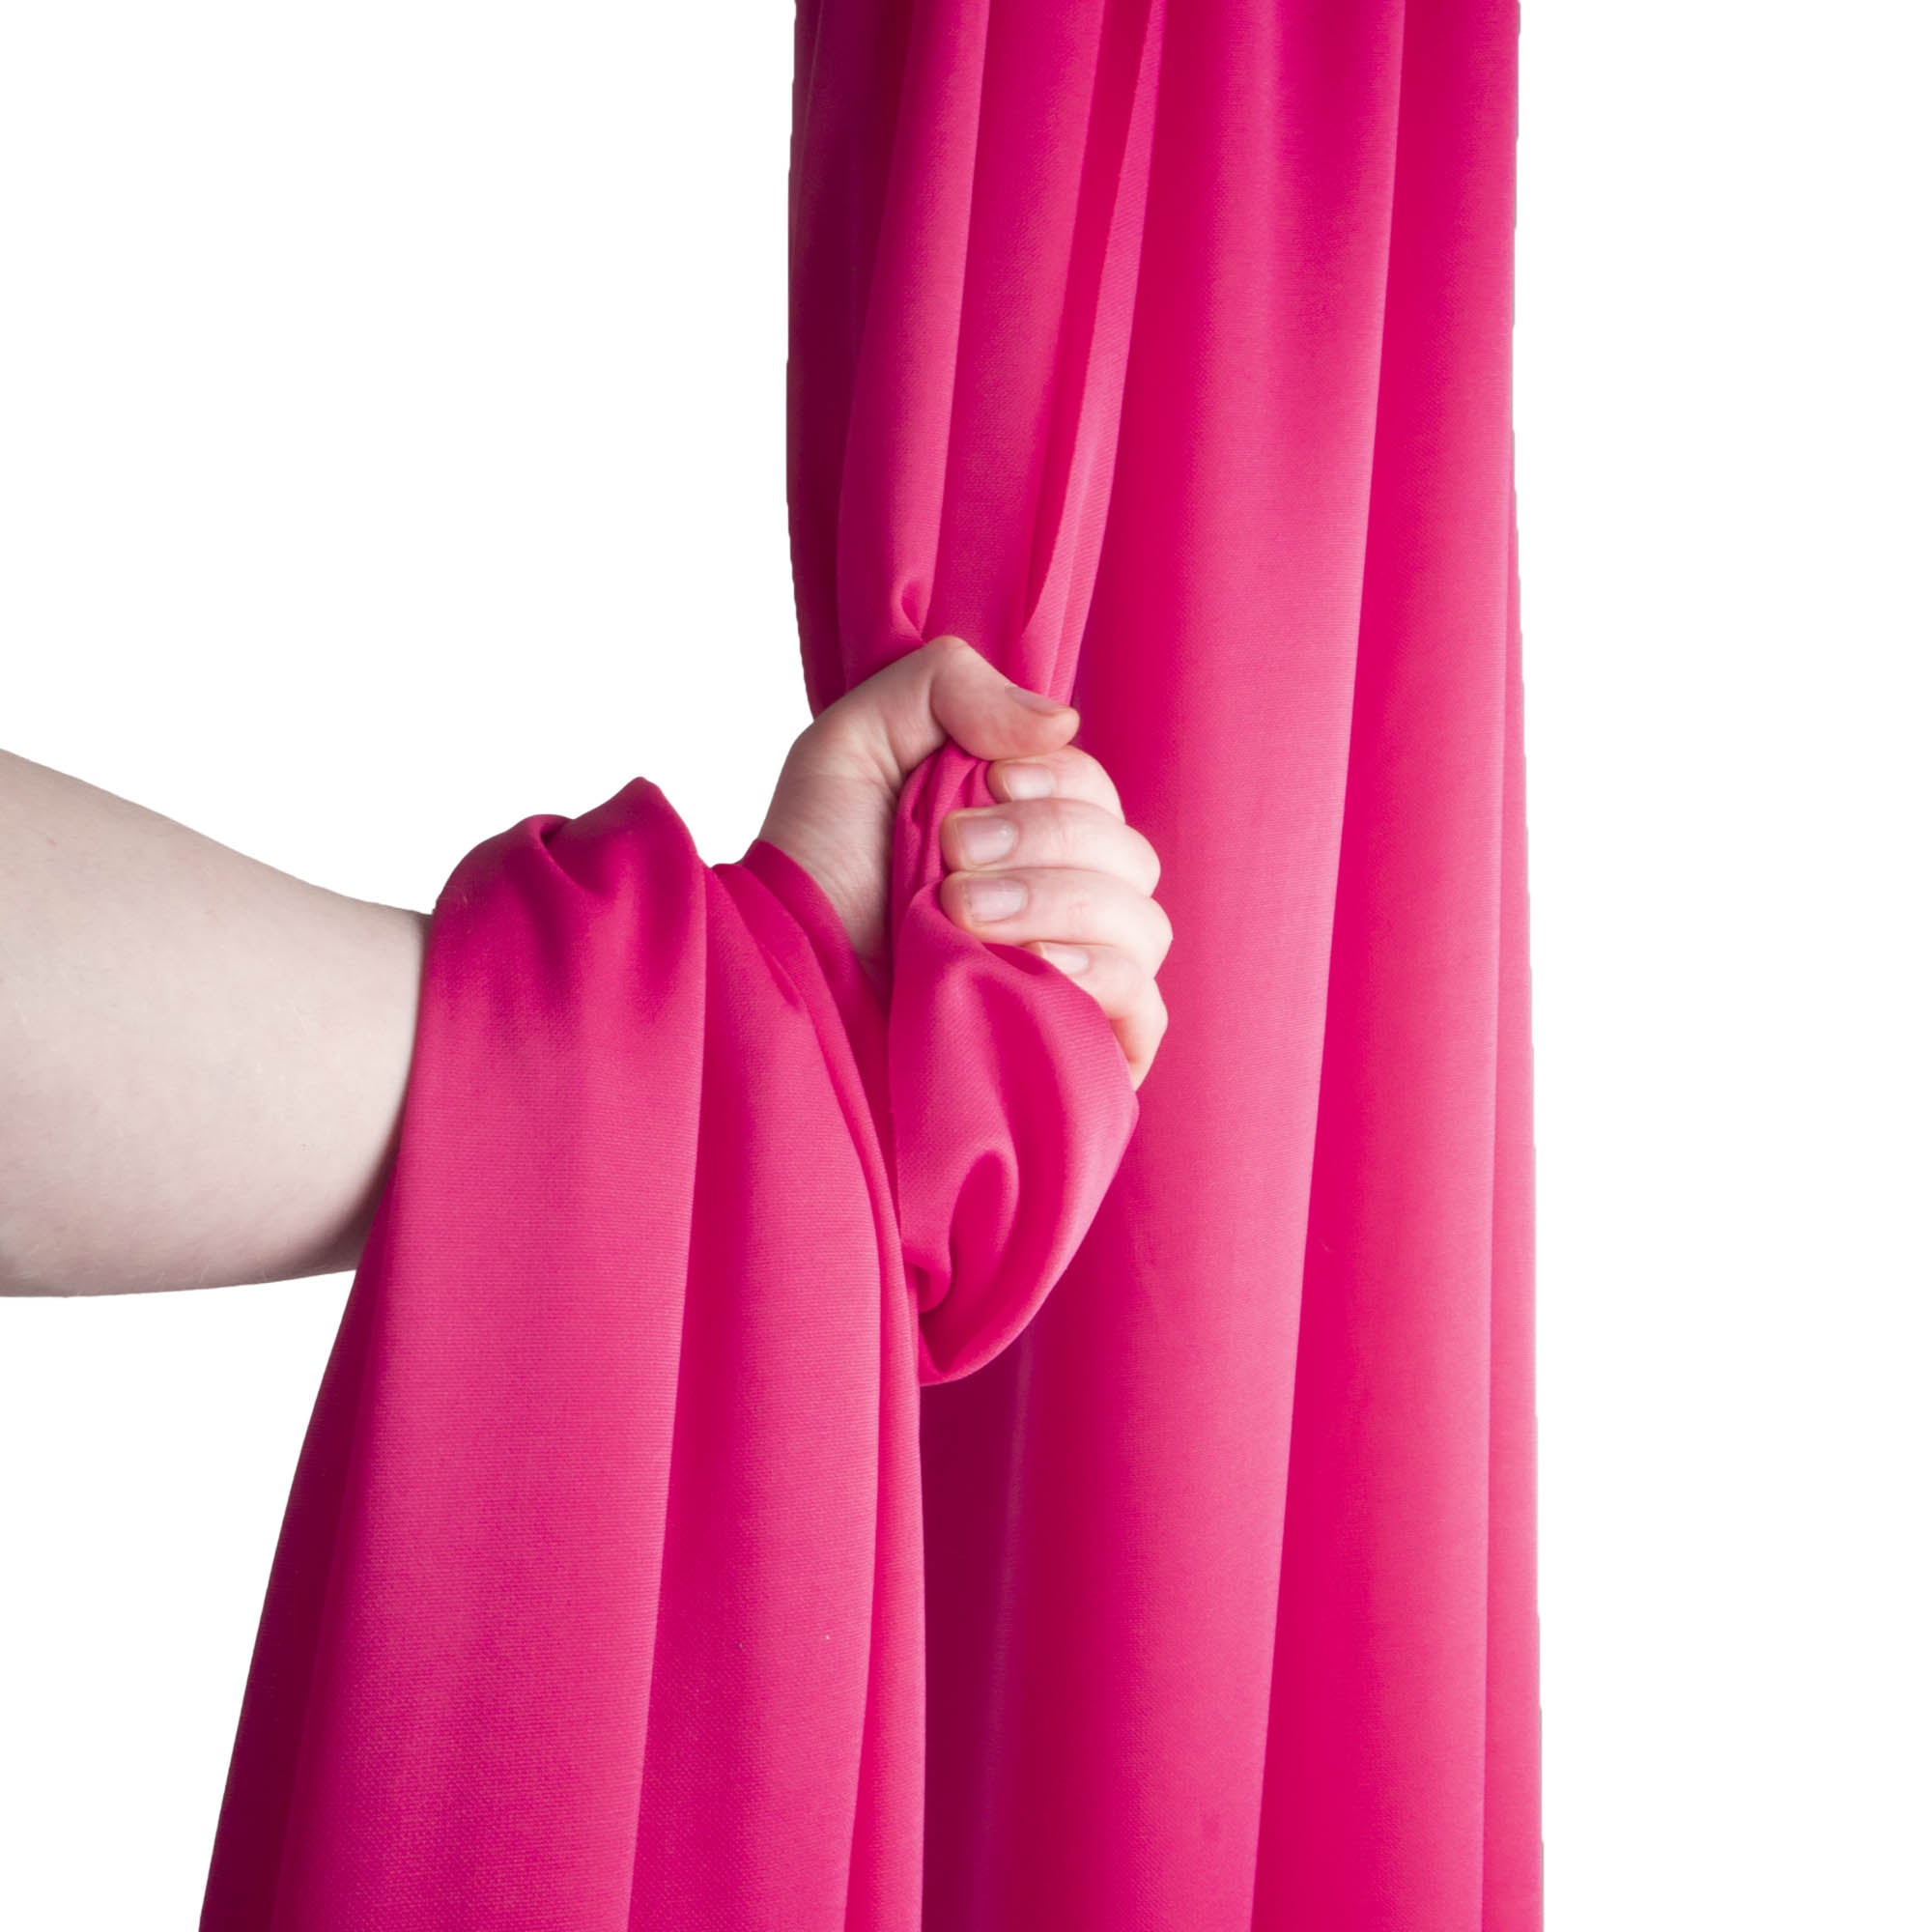 Hot pink silk wrapped around hand